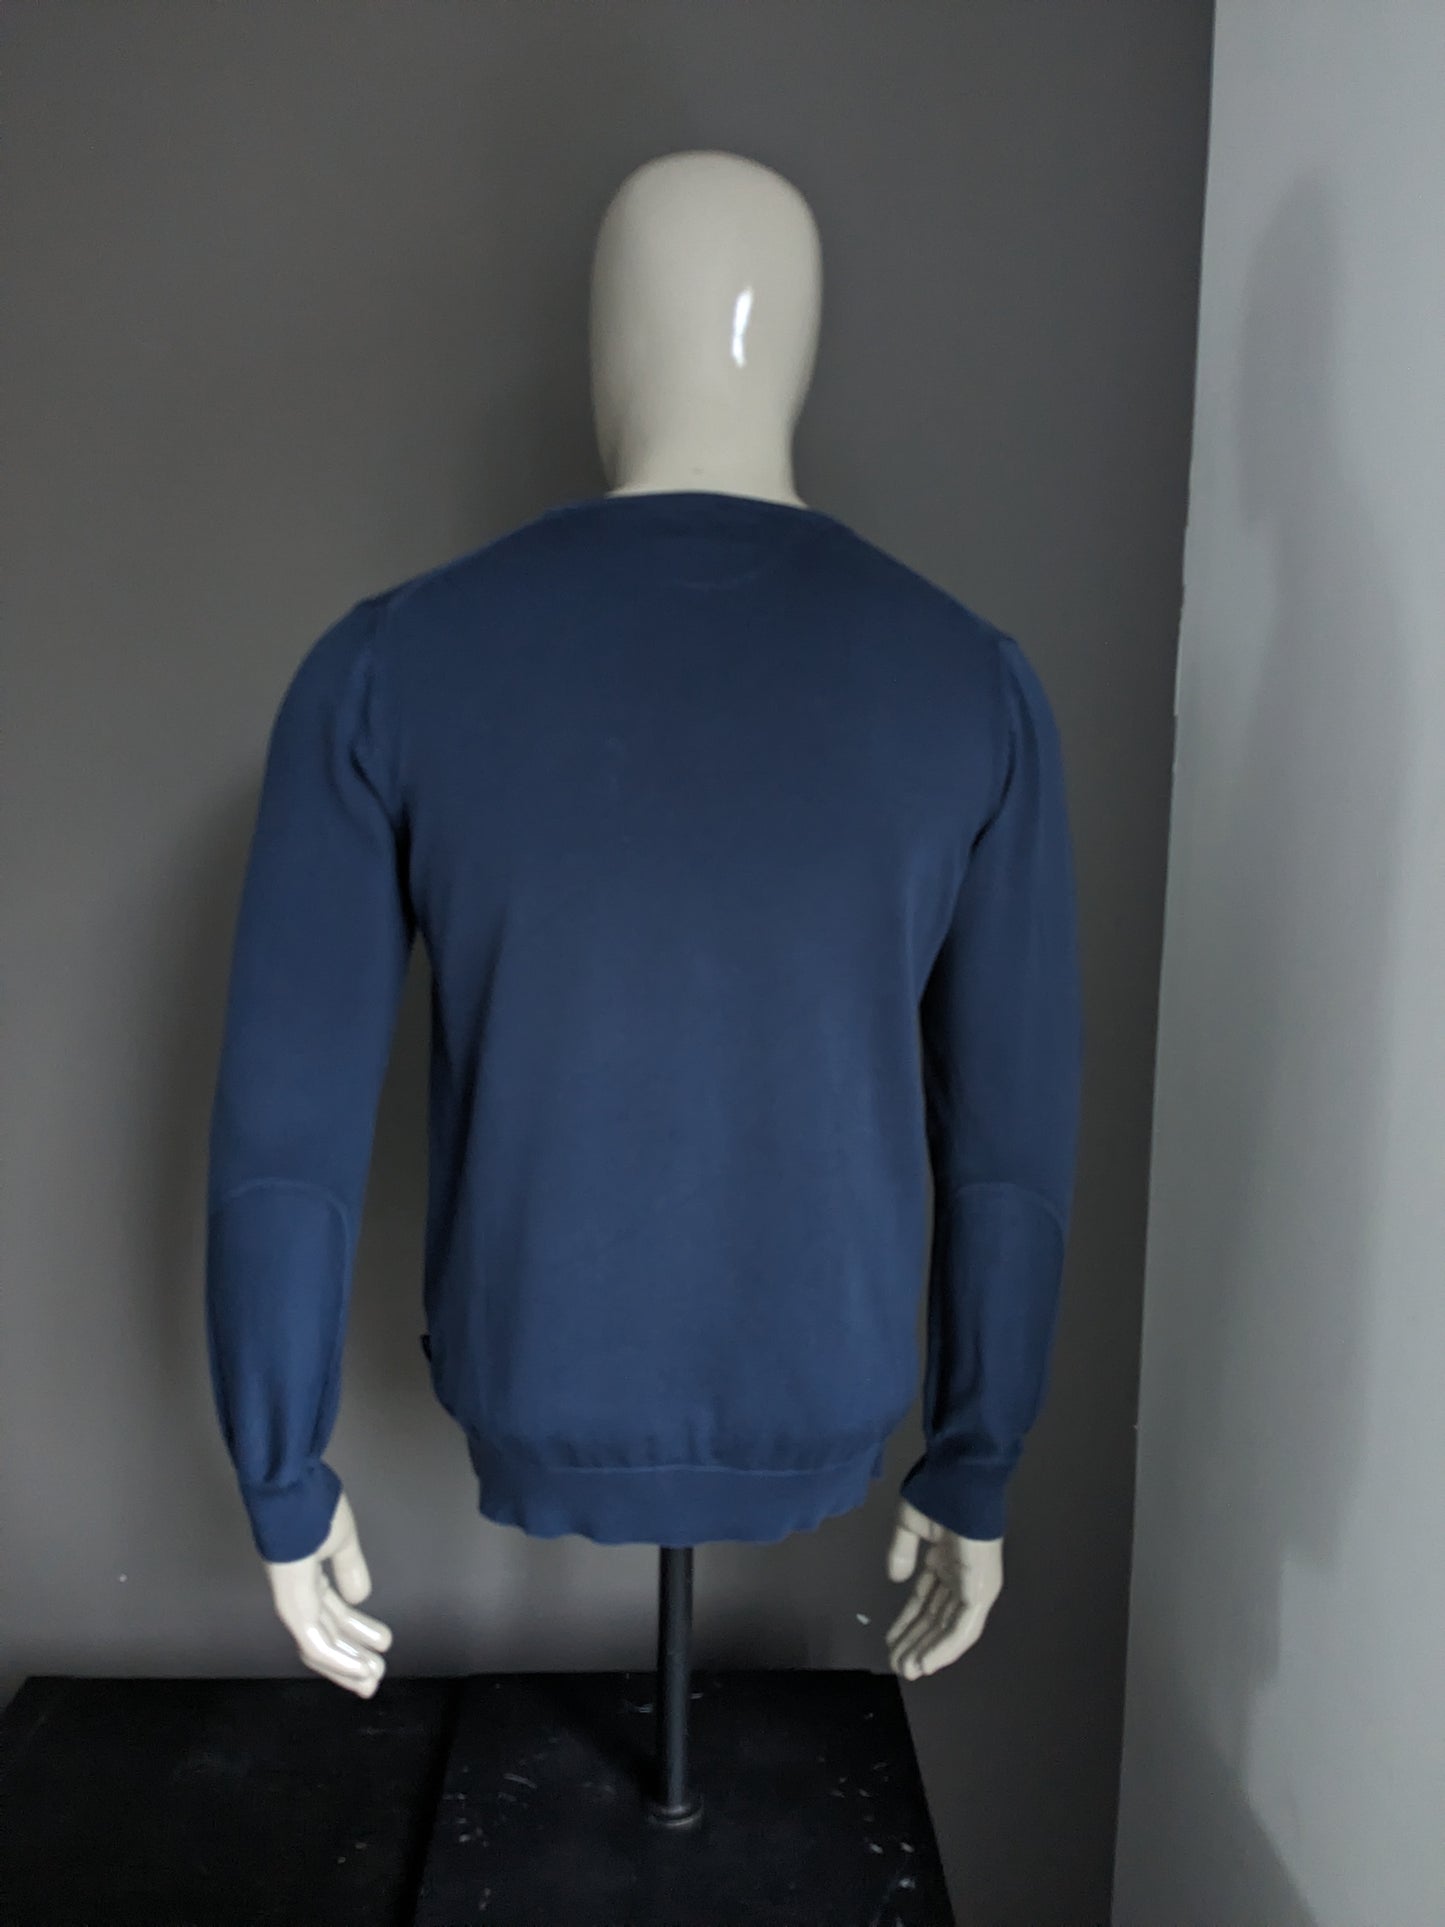 Sétidor de algodón Cavallaro con cuello en V. Color azul oscuro. Tamaño S.